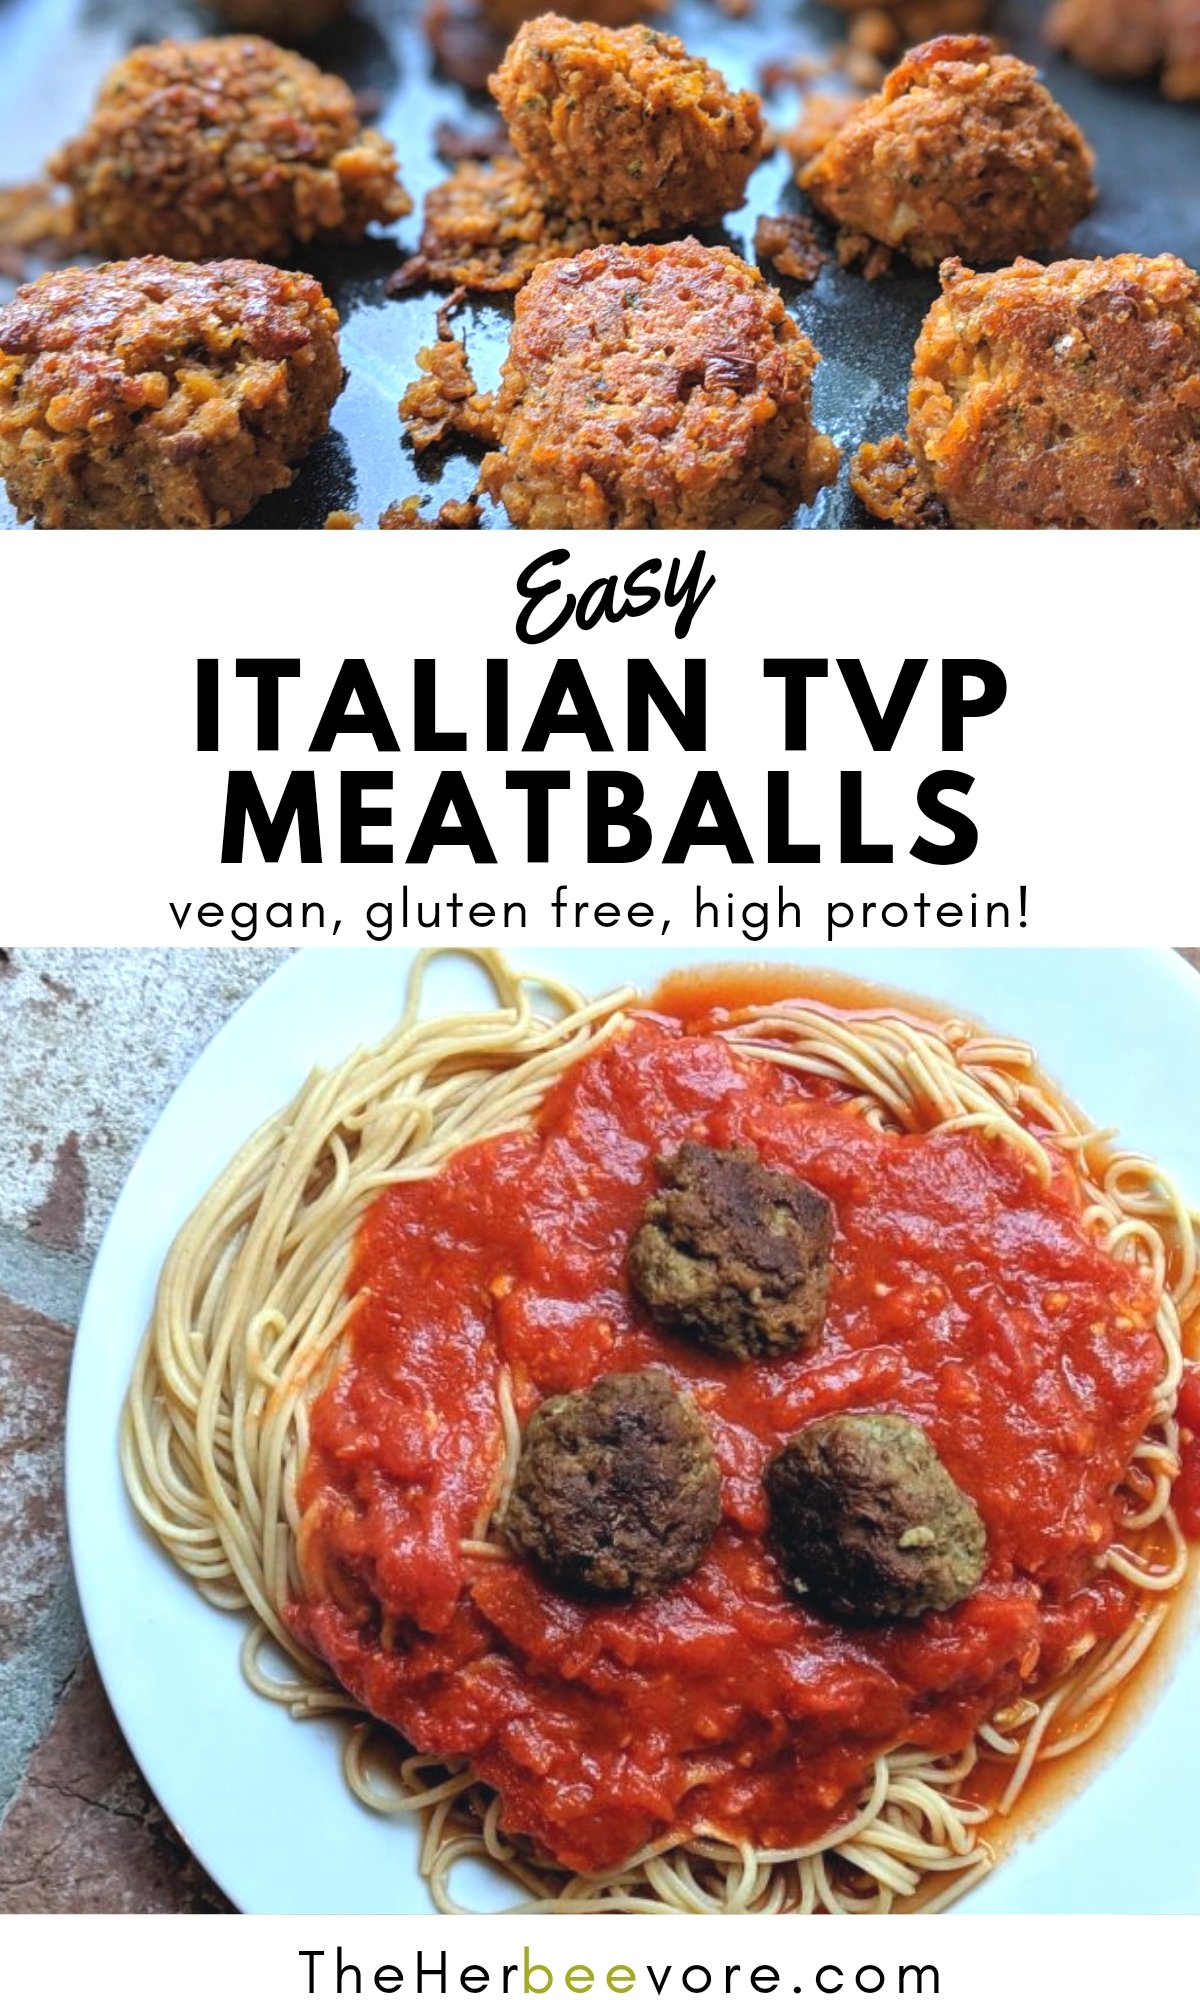 tvp meatballs recipe vegan gluten free high protein vegan meatballs with textured vegetable protein